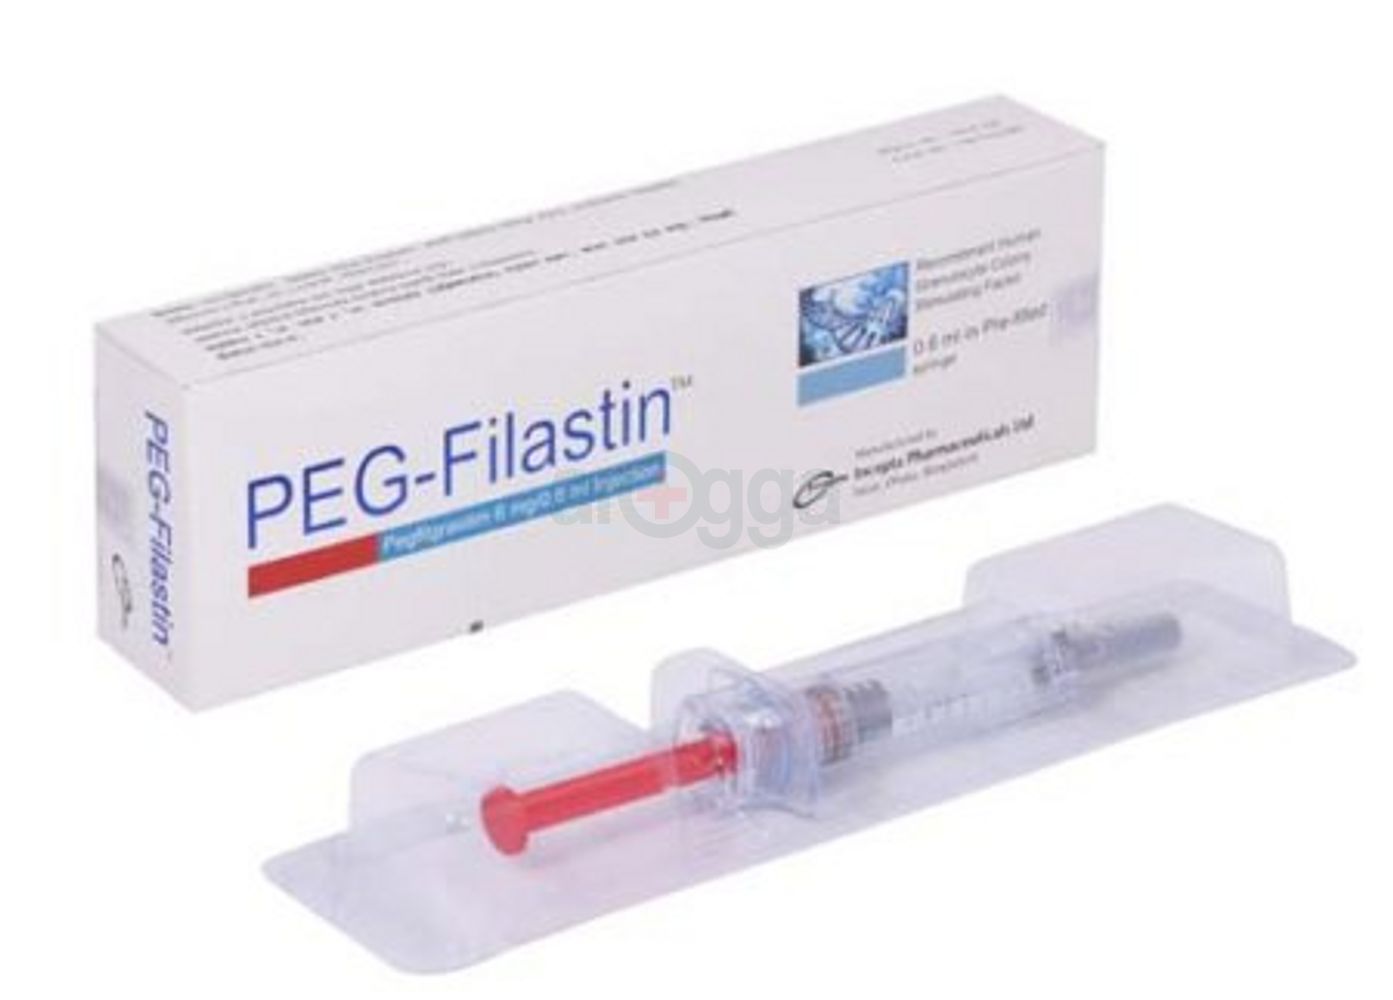 PEG-Filastin